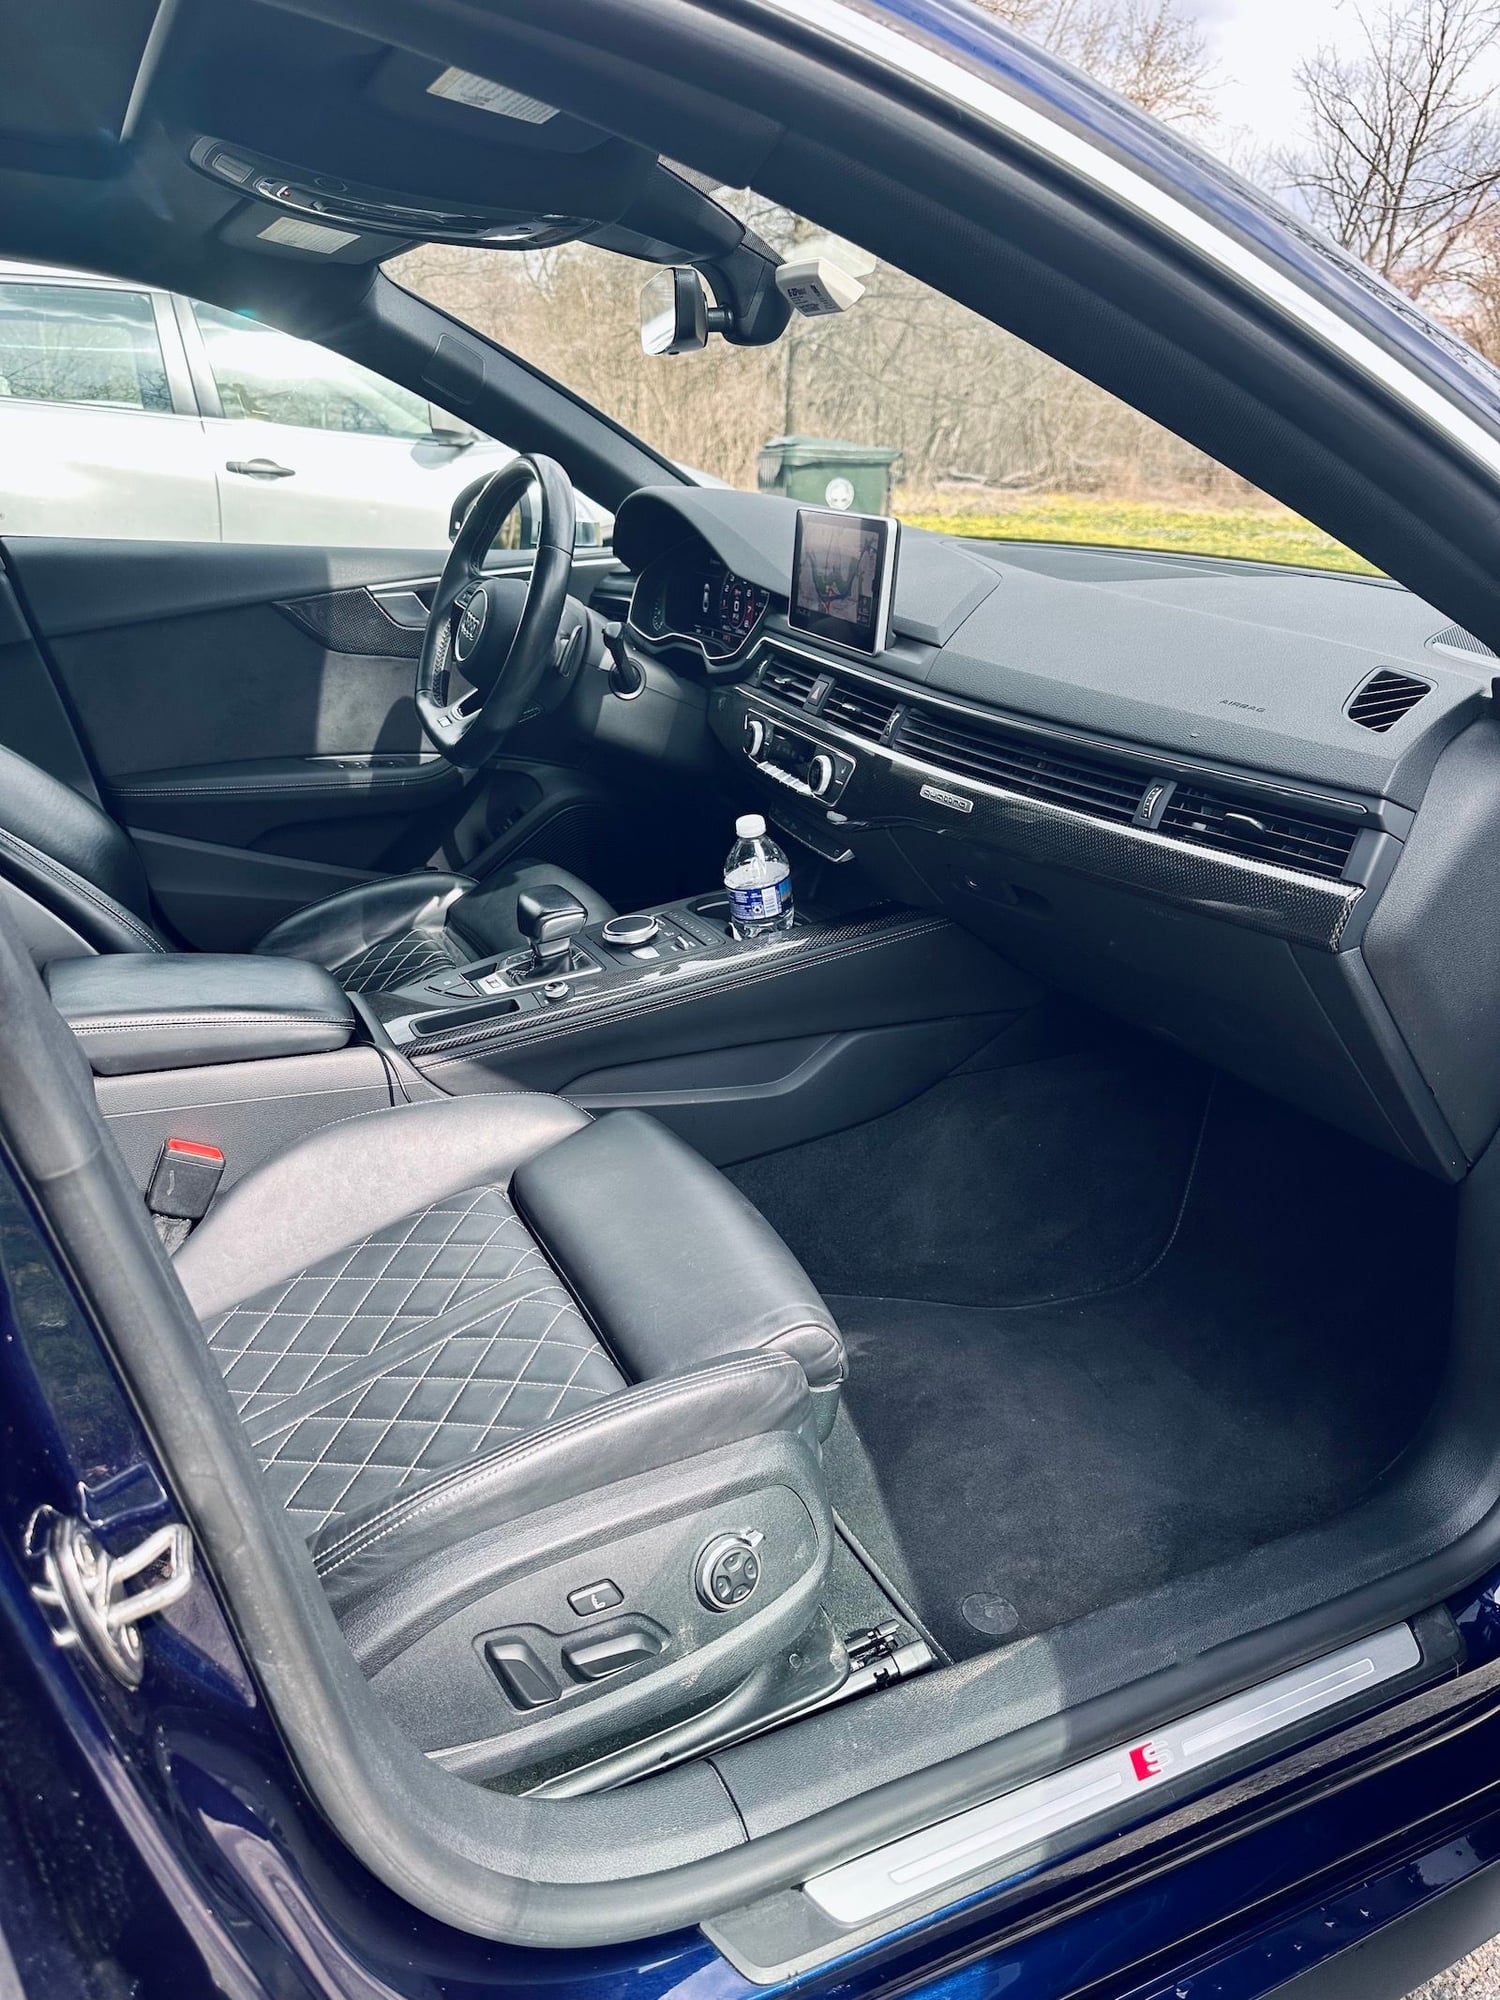 2018 Audi S5 Sportback - 2018 Audi S5 Sportback in Navarre Blue - Used - VIN WAUB4CF57JA006016 - 49,000 Miles - 6 cyl - AWD - Automatic - Sedan - Blue - Kensington, MD 20895, United States